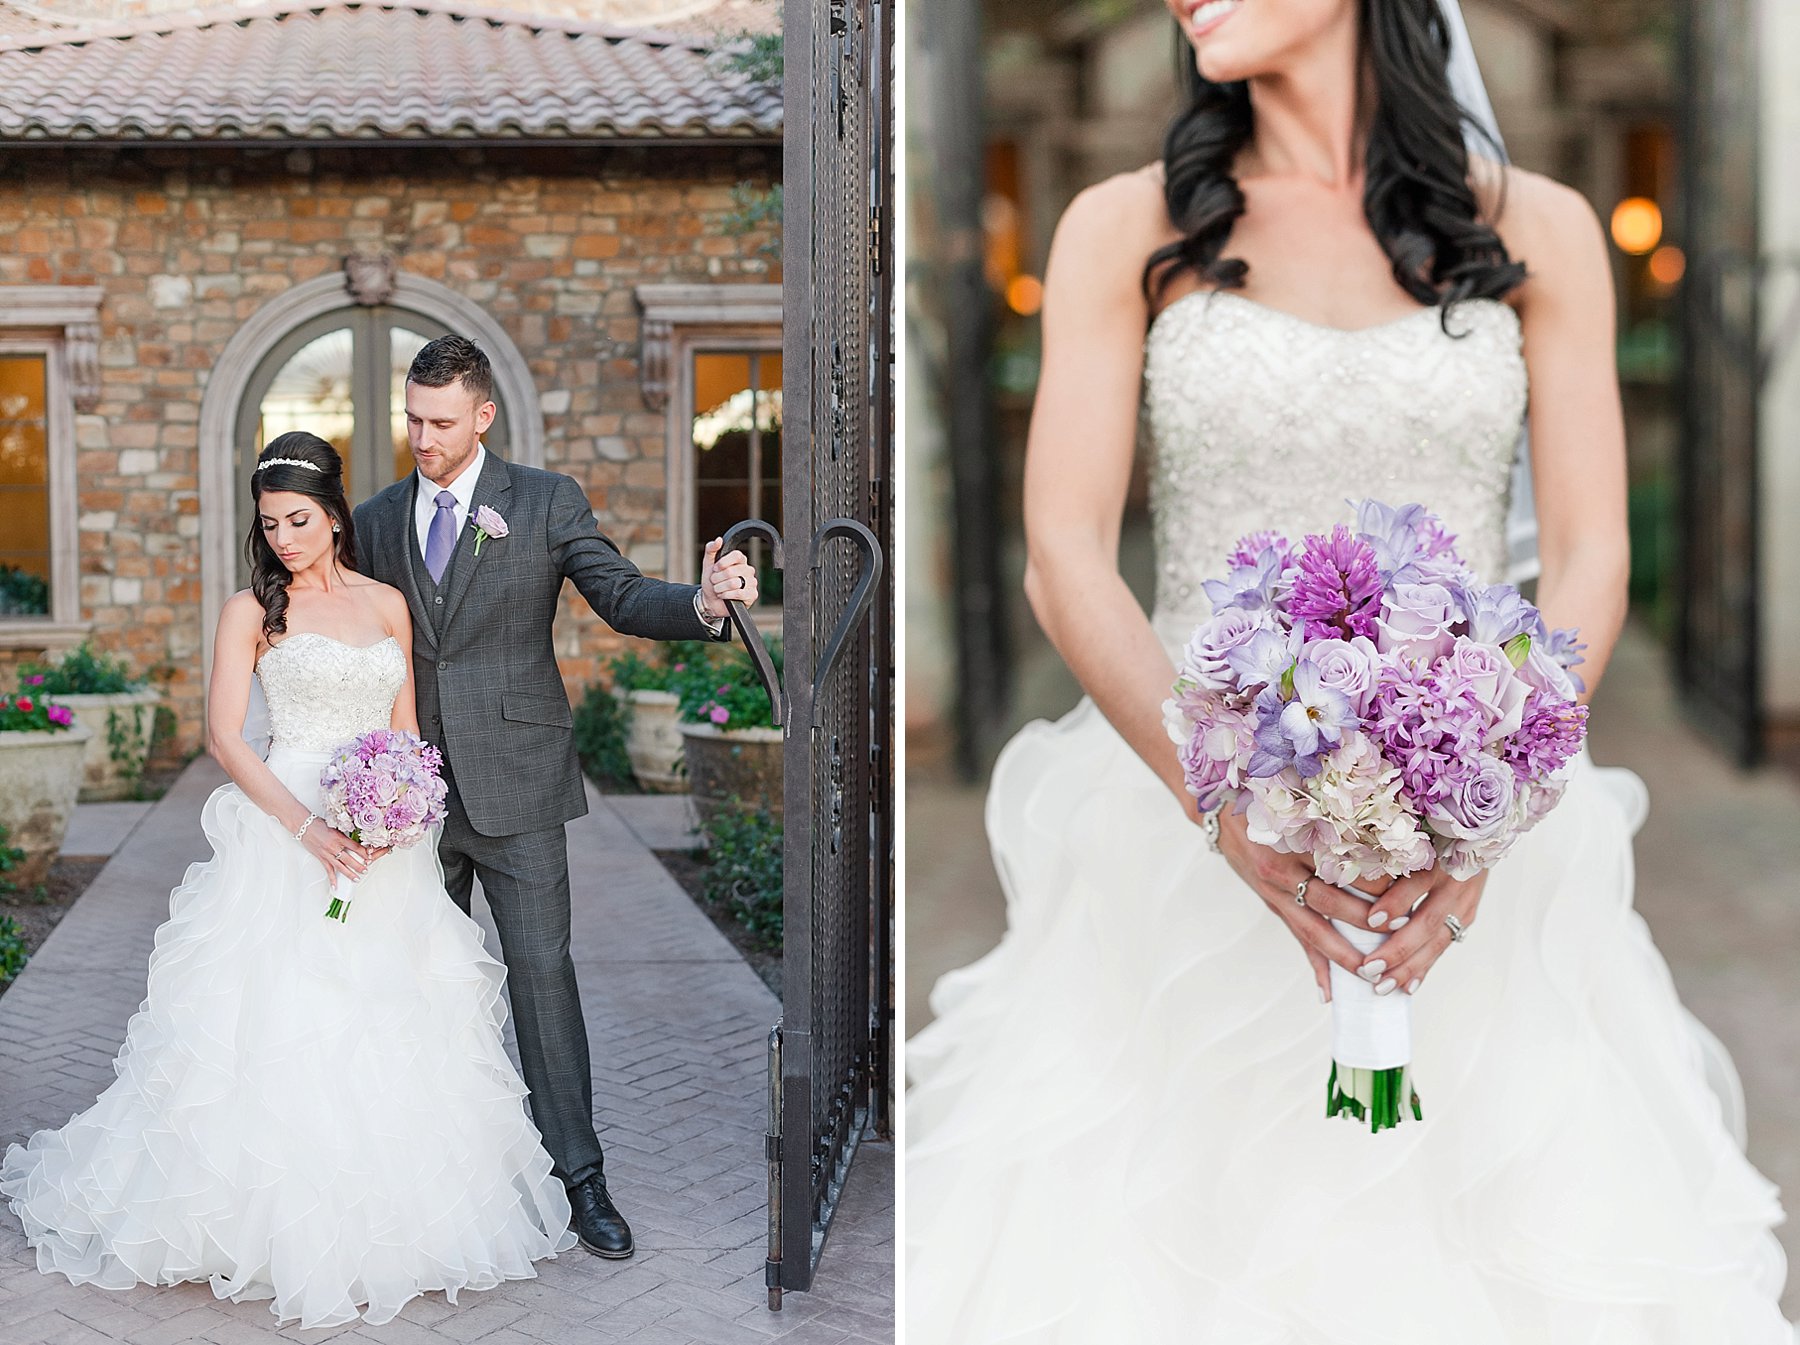 Villa Siena Middlebrooks Dell Wedding Bride Groom Portrait Blume Events Phoenix Arizona Photo